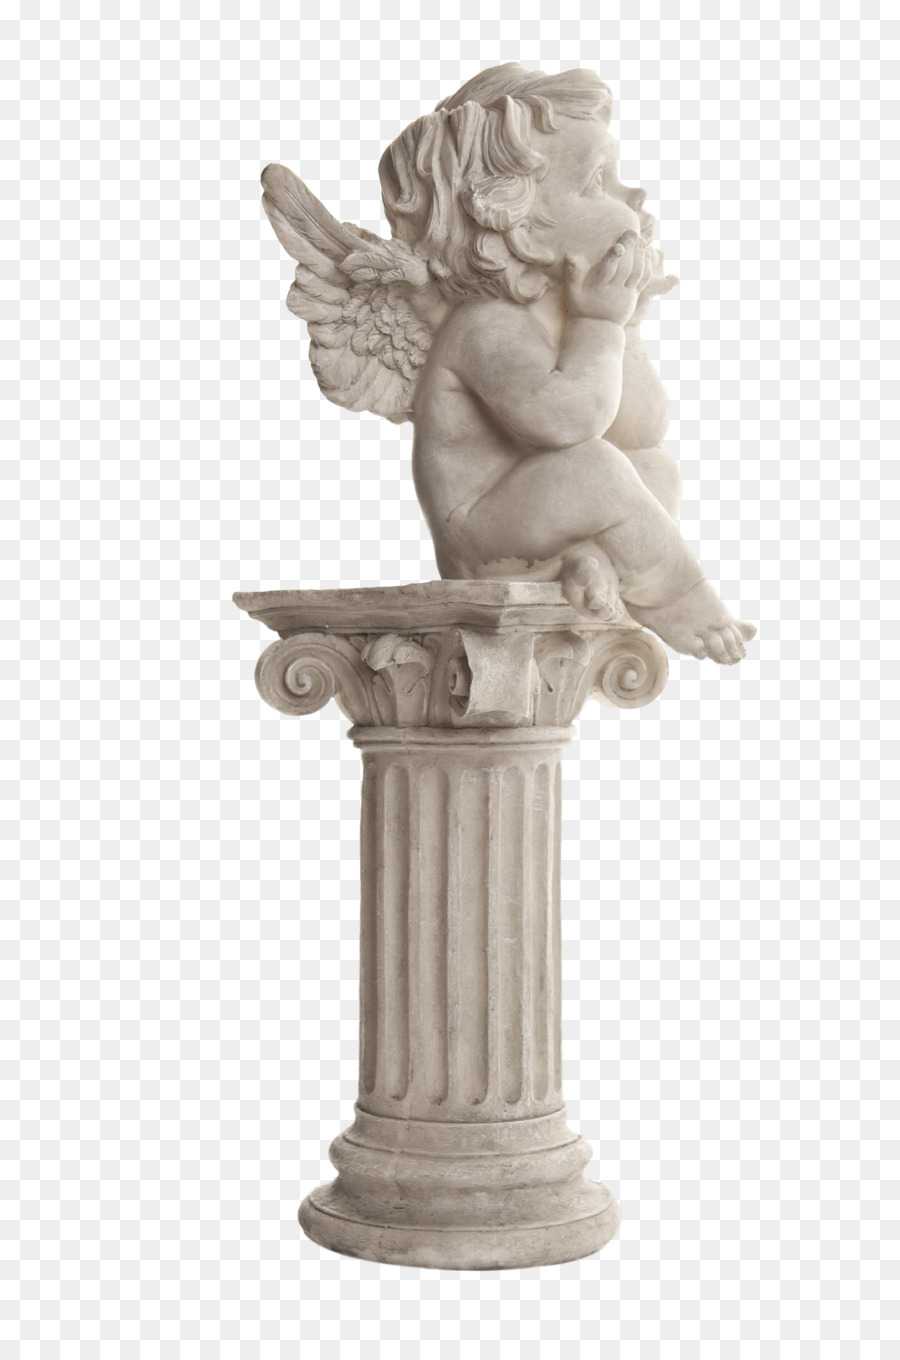 Statue Sculpture Art Figurine - angel statue png download - 1672*2508 - Free Transparent Statue png Download.